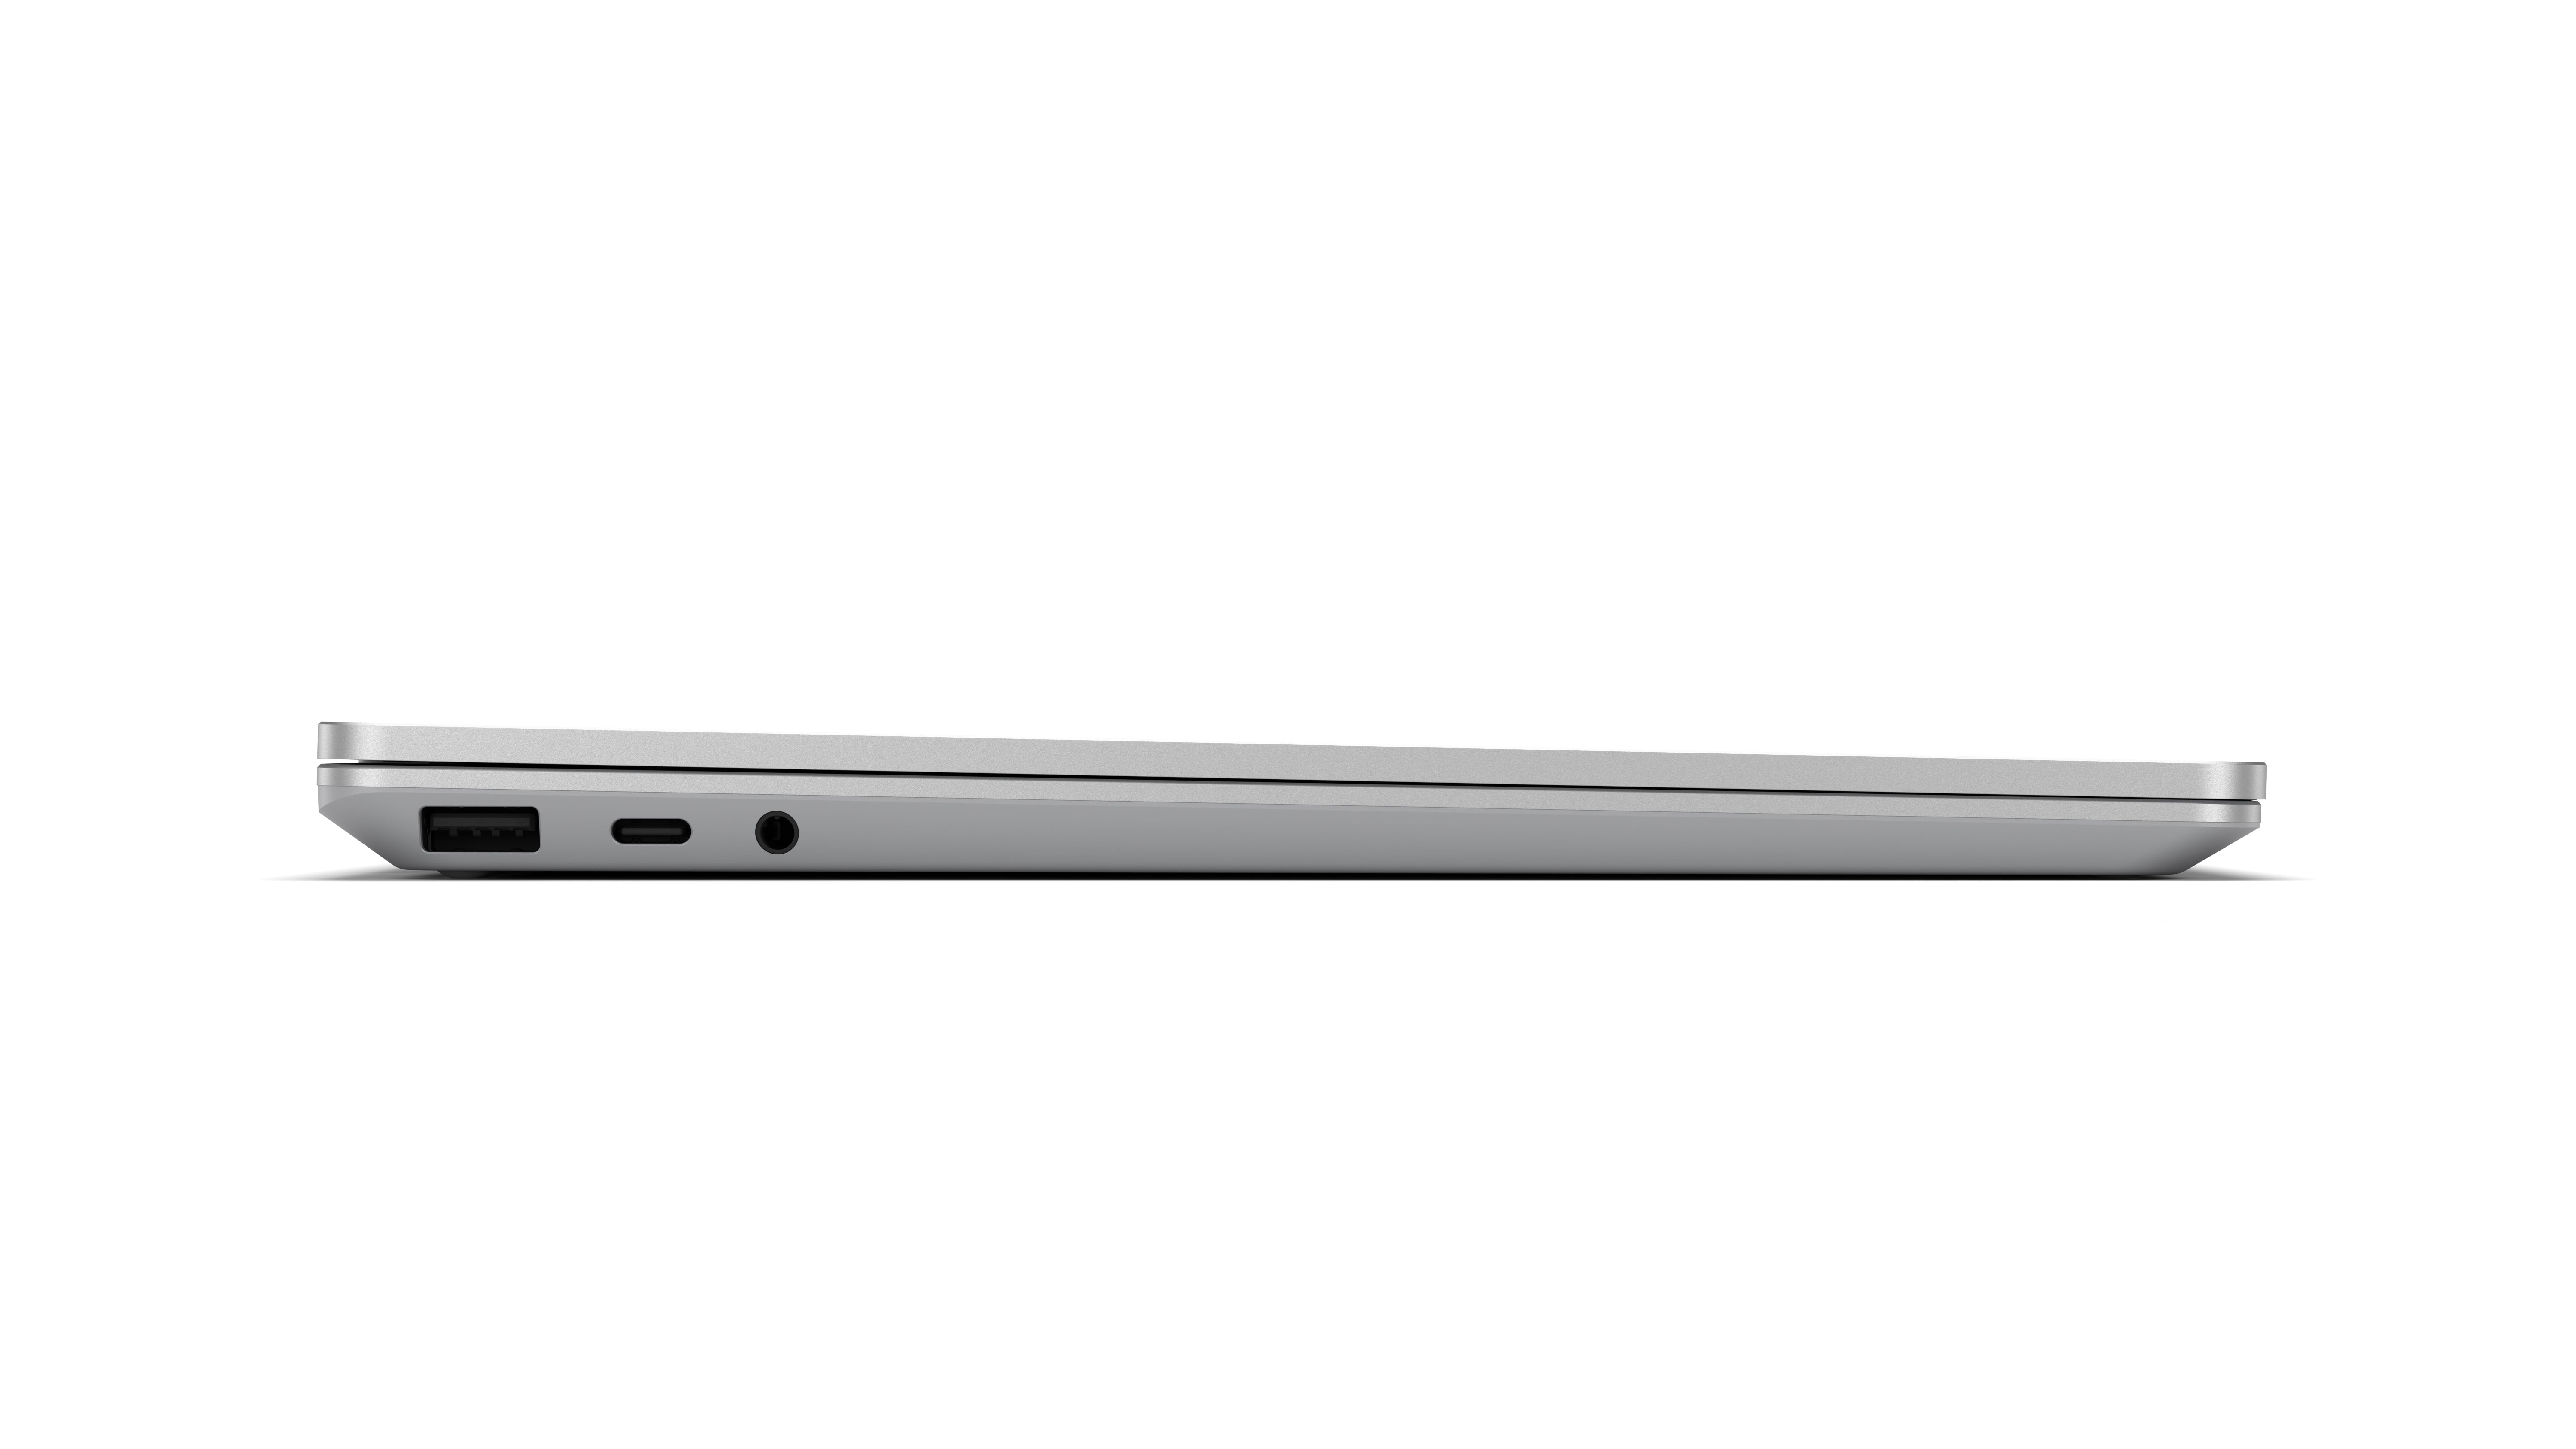 Microsoft Surface Laptop Go 12 inch i5/8GB/256GB - Platinum 